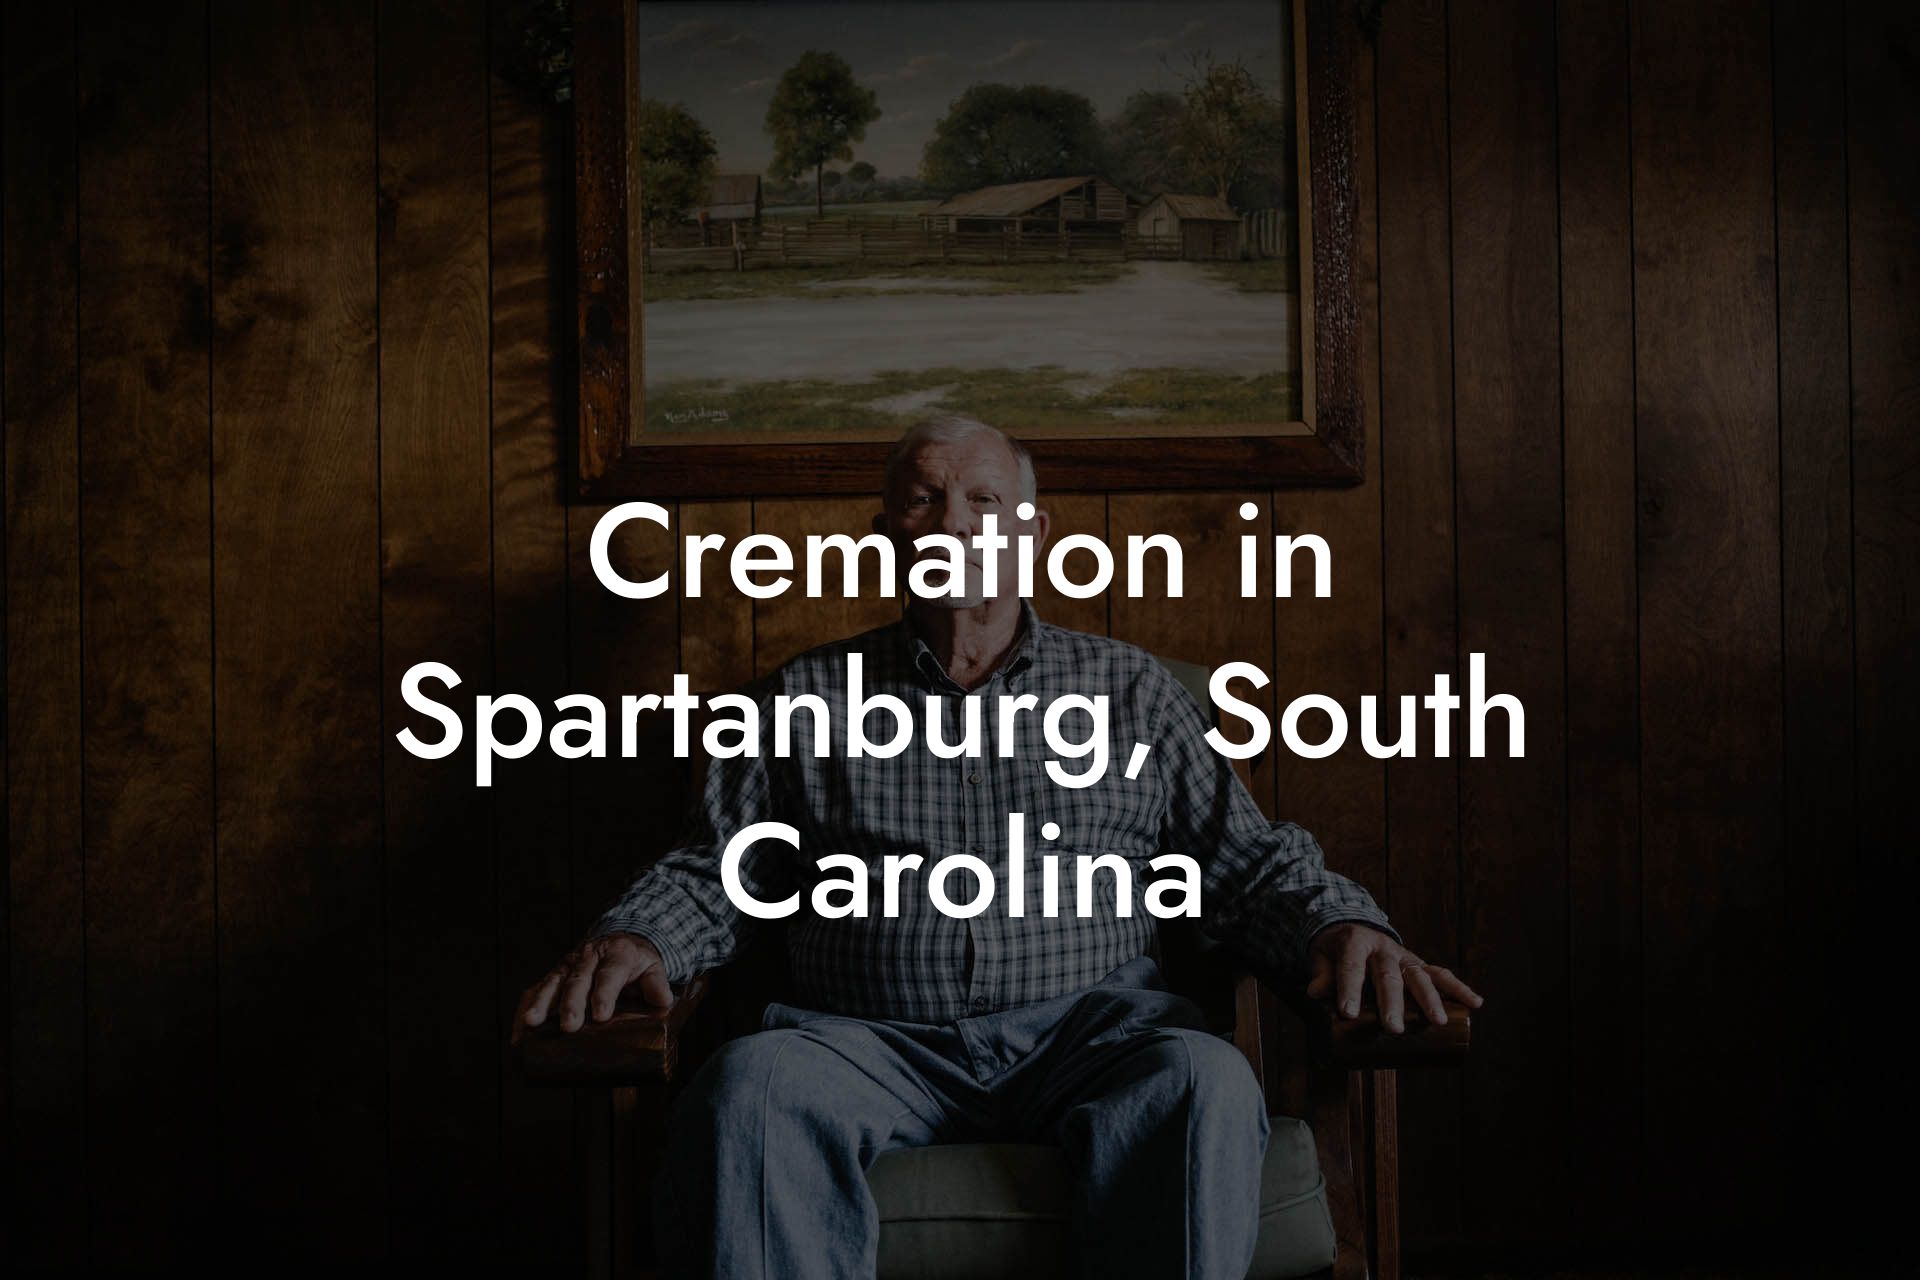 Cremation in Spartanburg, South Carolina